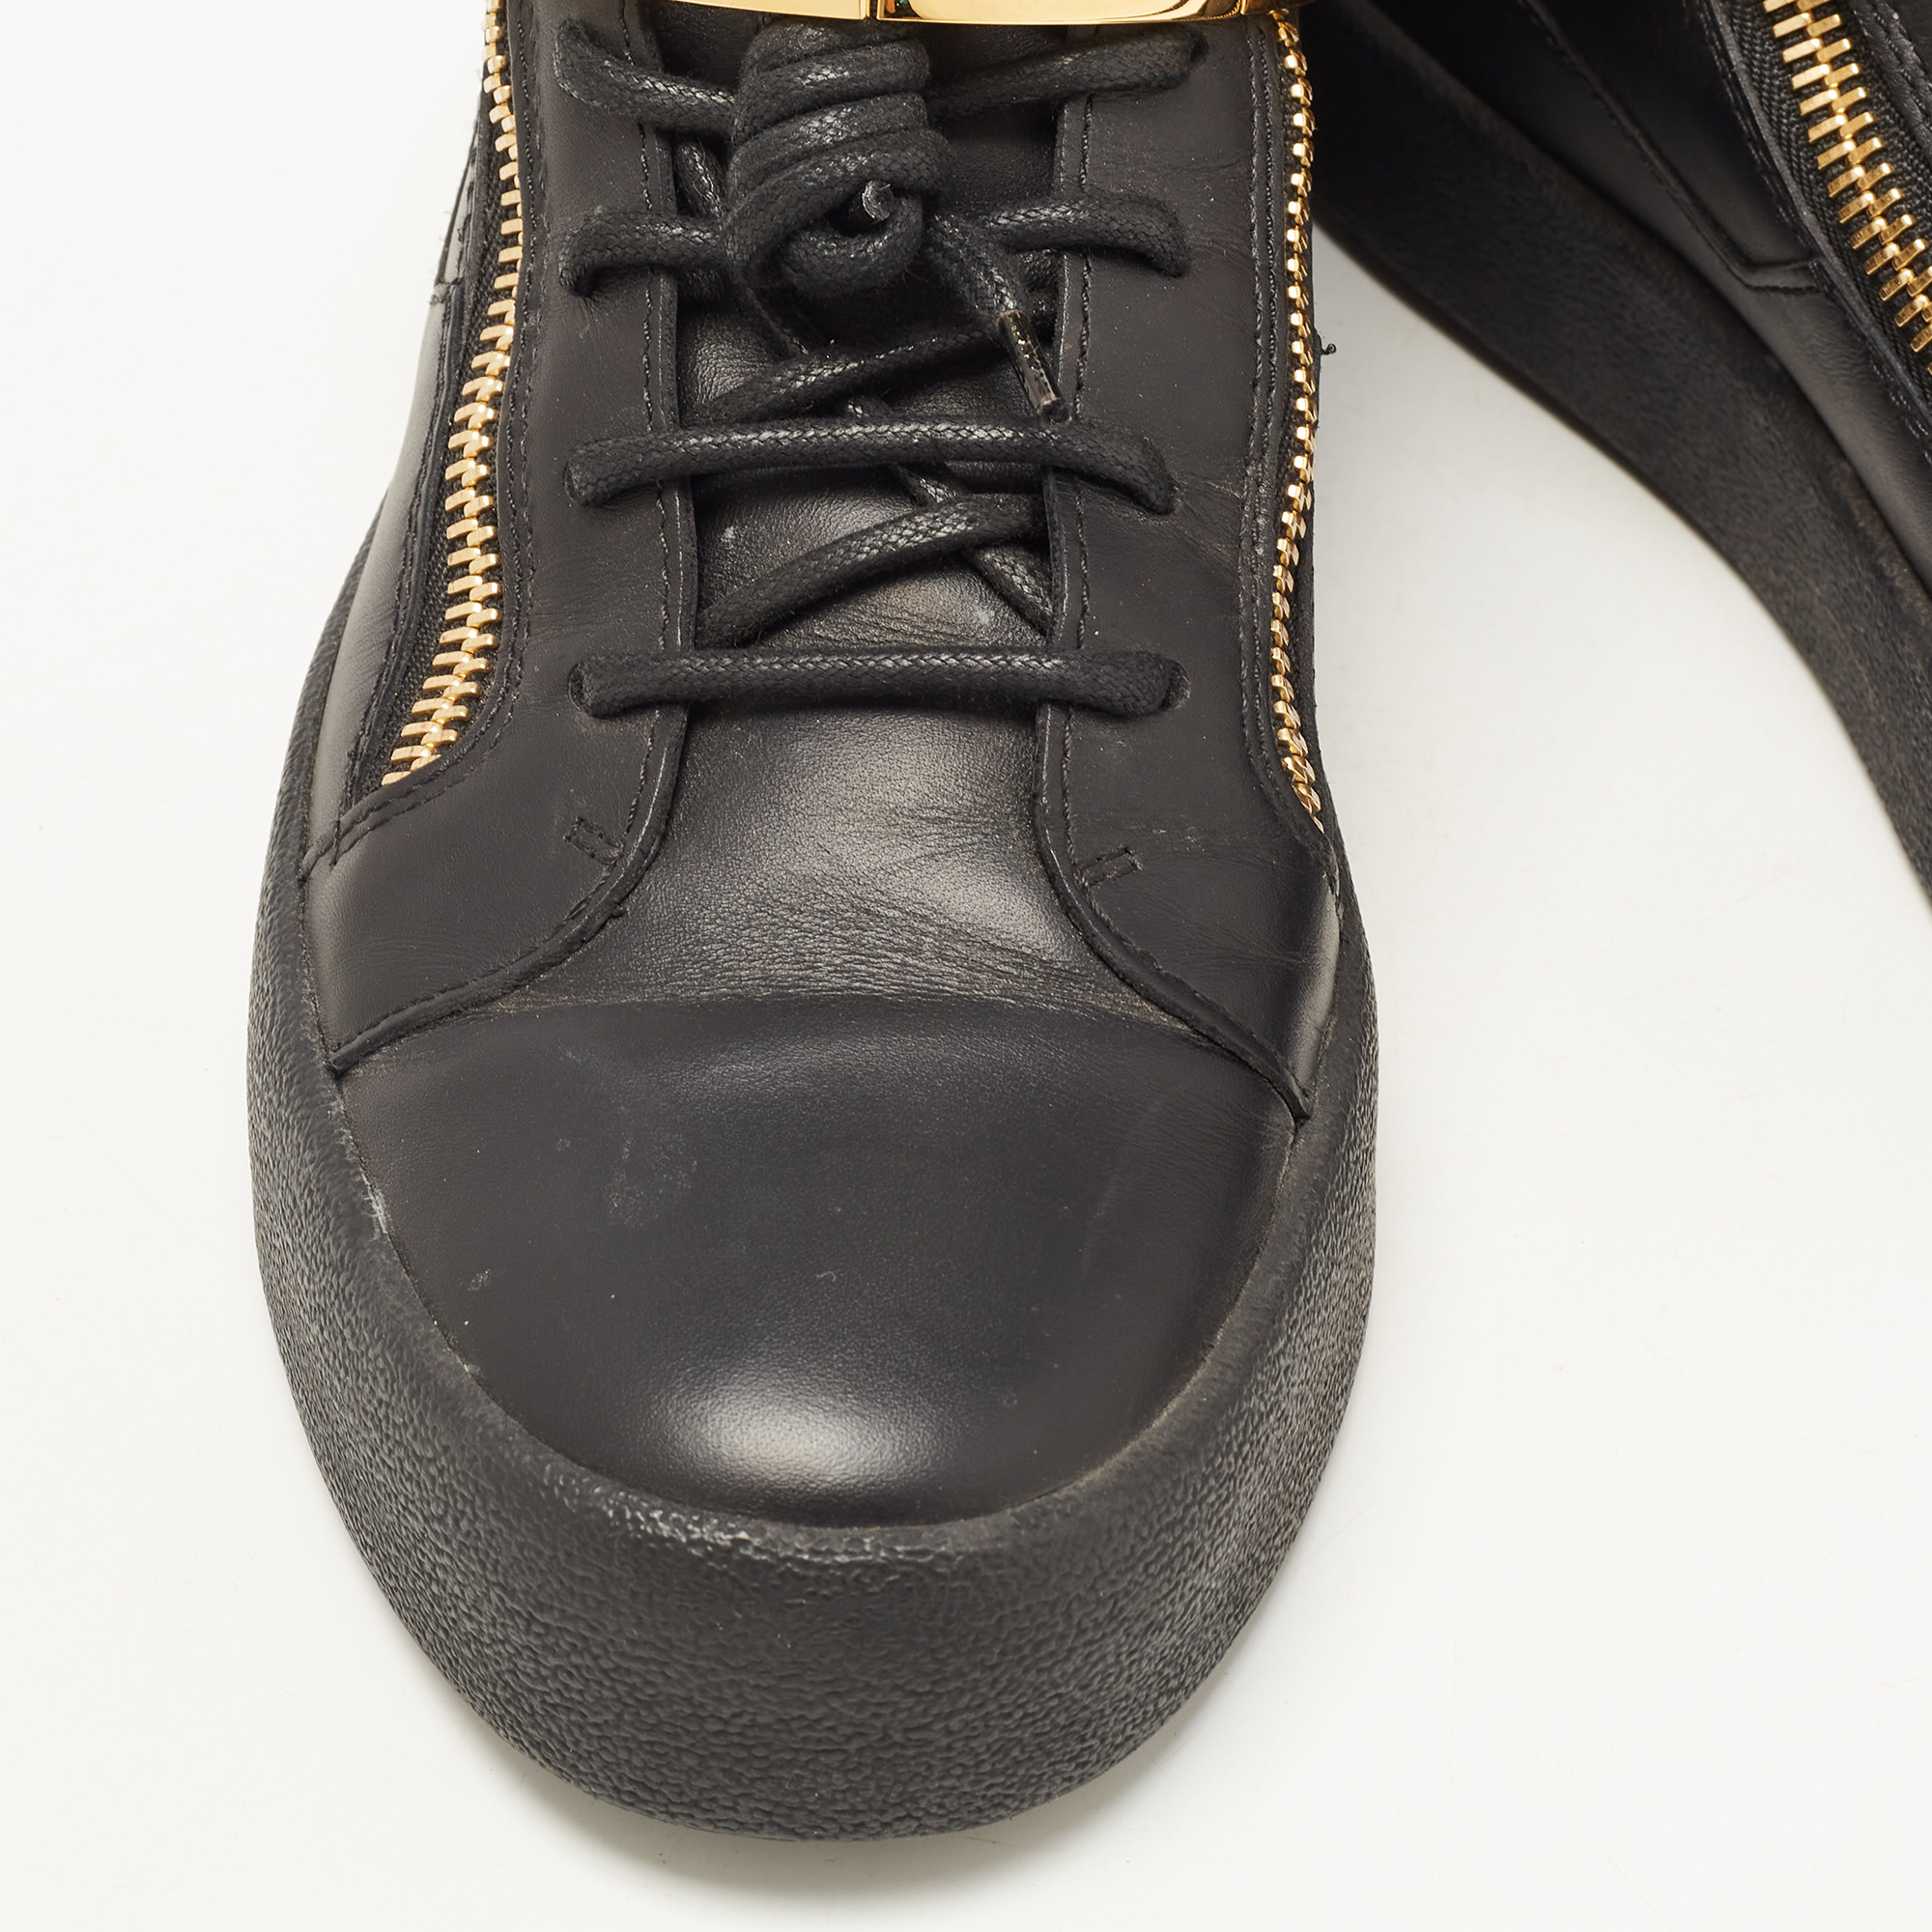 Giuseppe Zanotti Black Leather High Top Sneakers Size 40